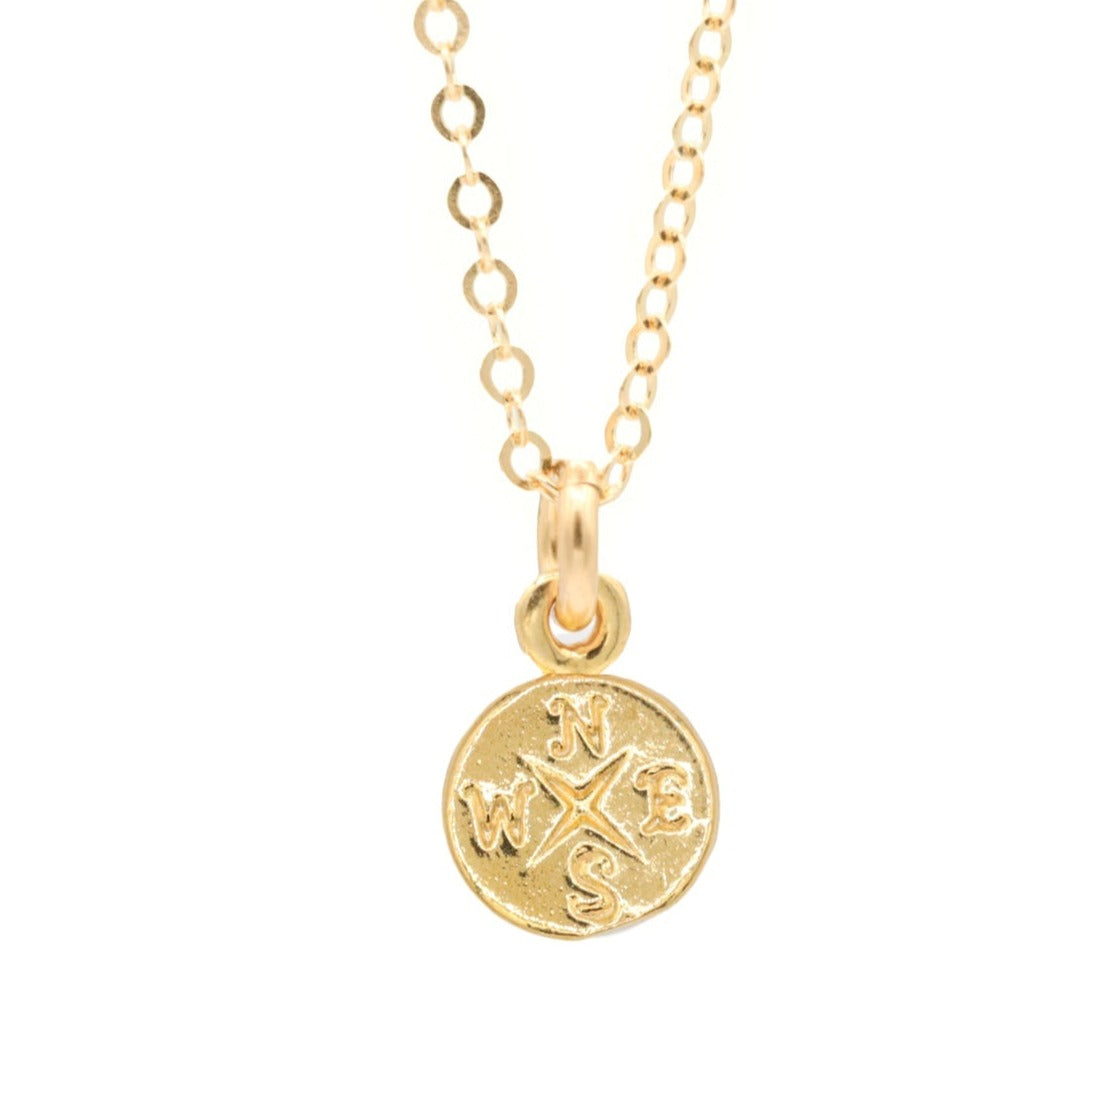 Compass Necklace - 14K gold filled + gold vermeil